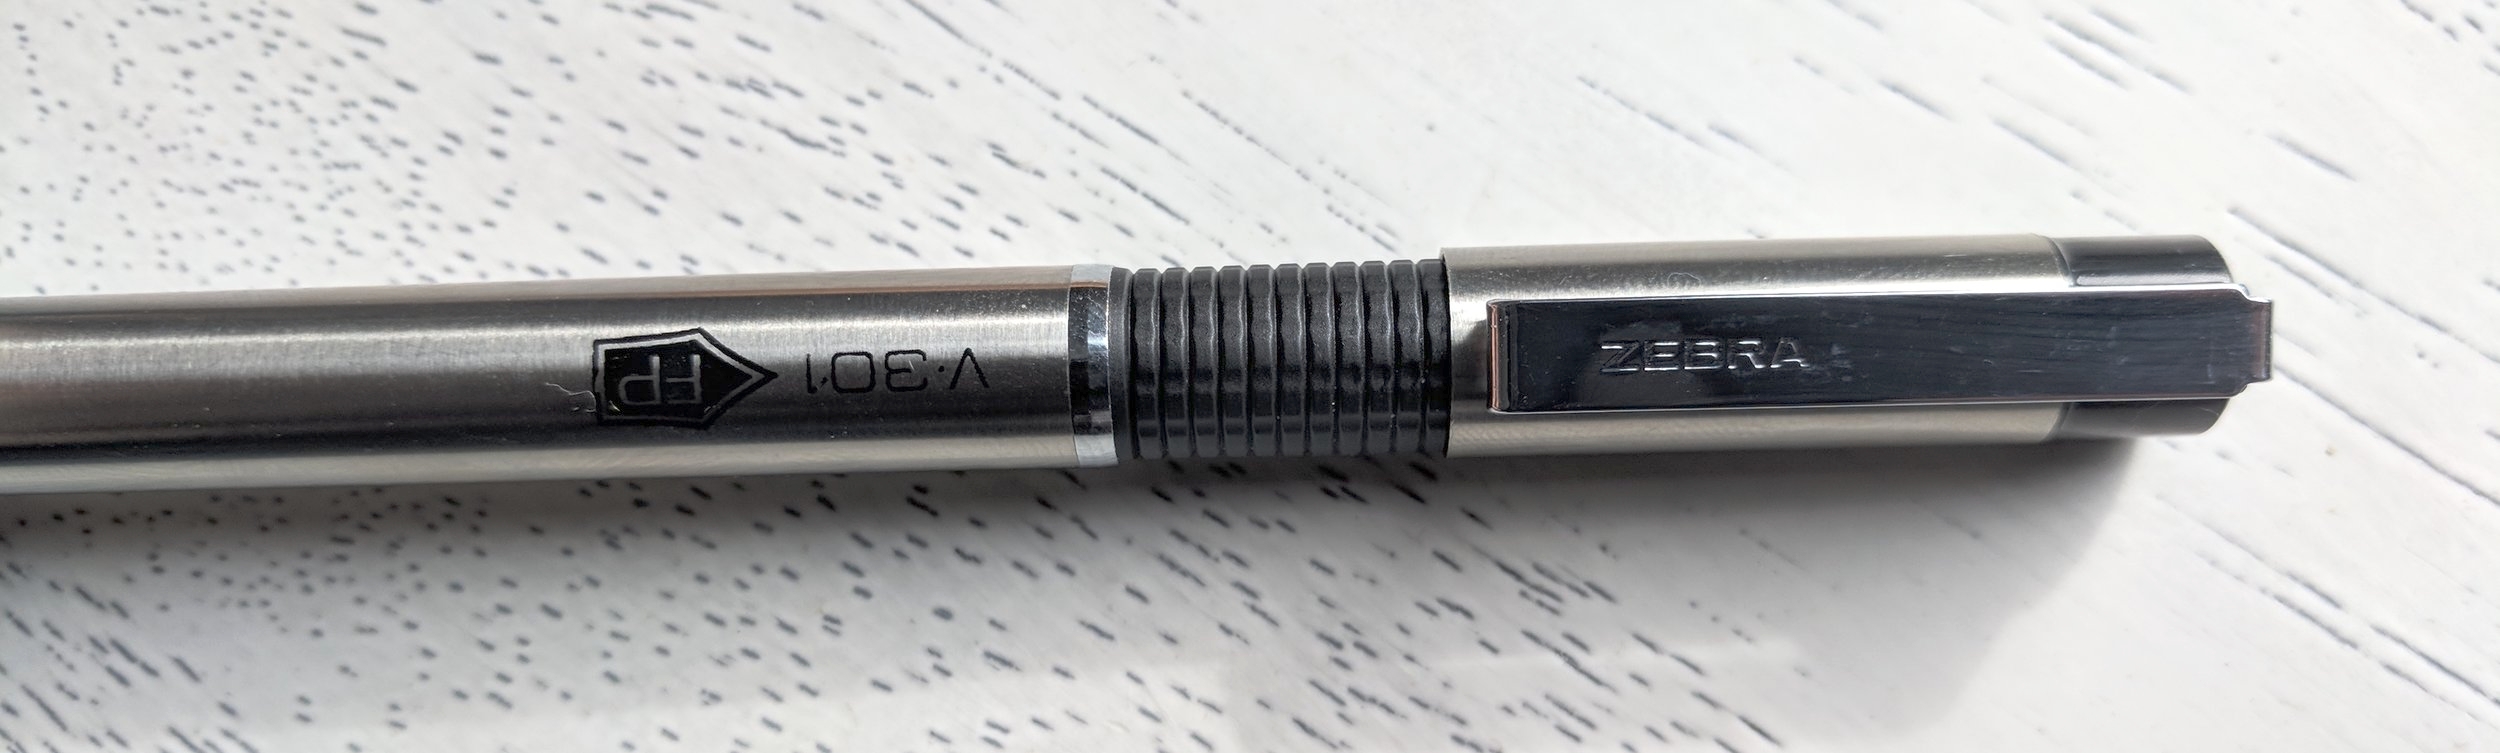 Zebra V-301 Fountain Pen Review — A Better Desk